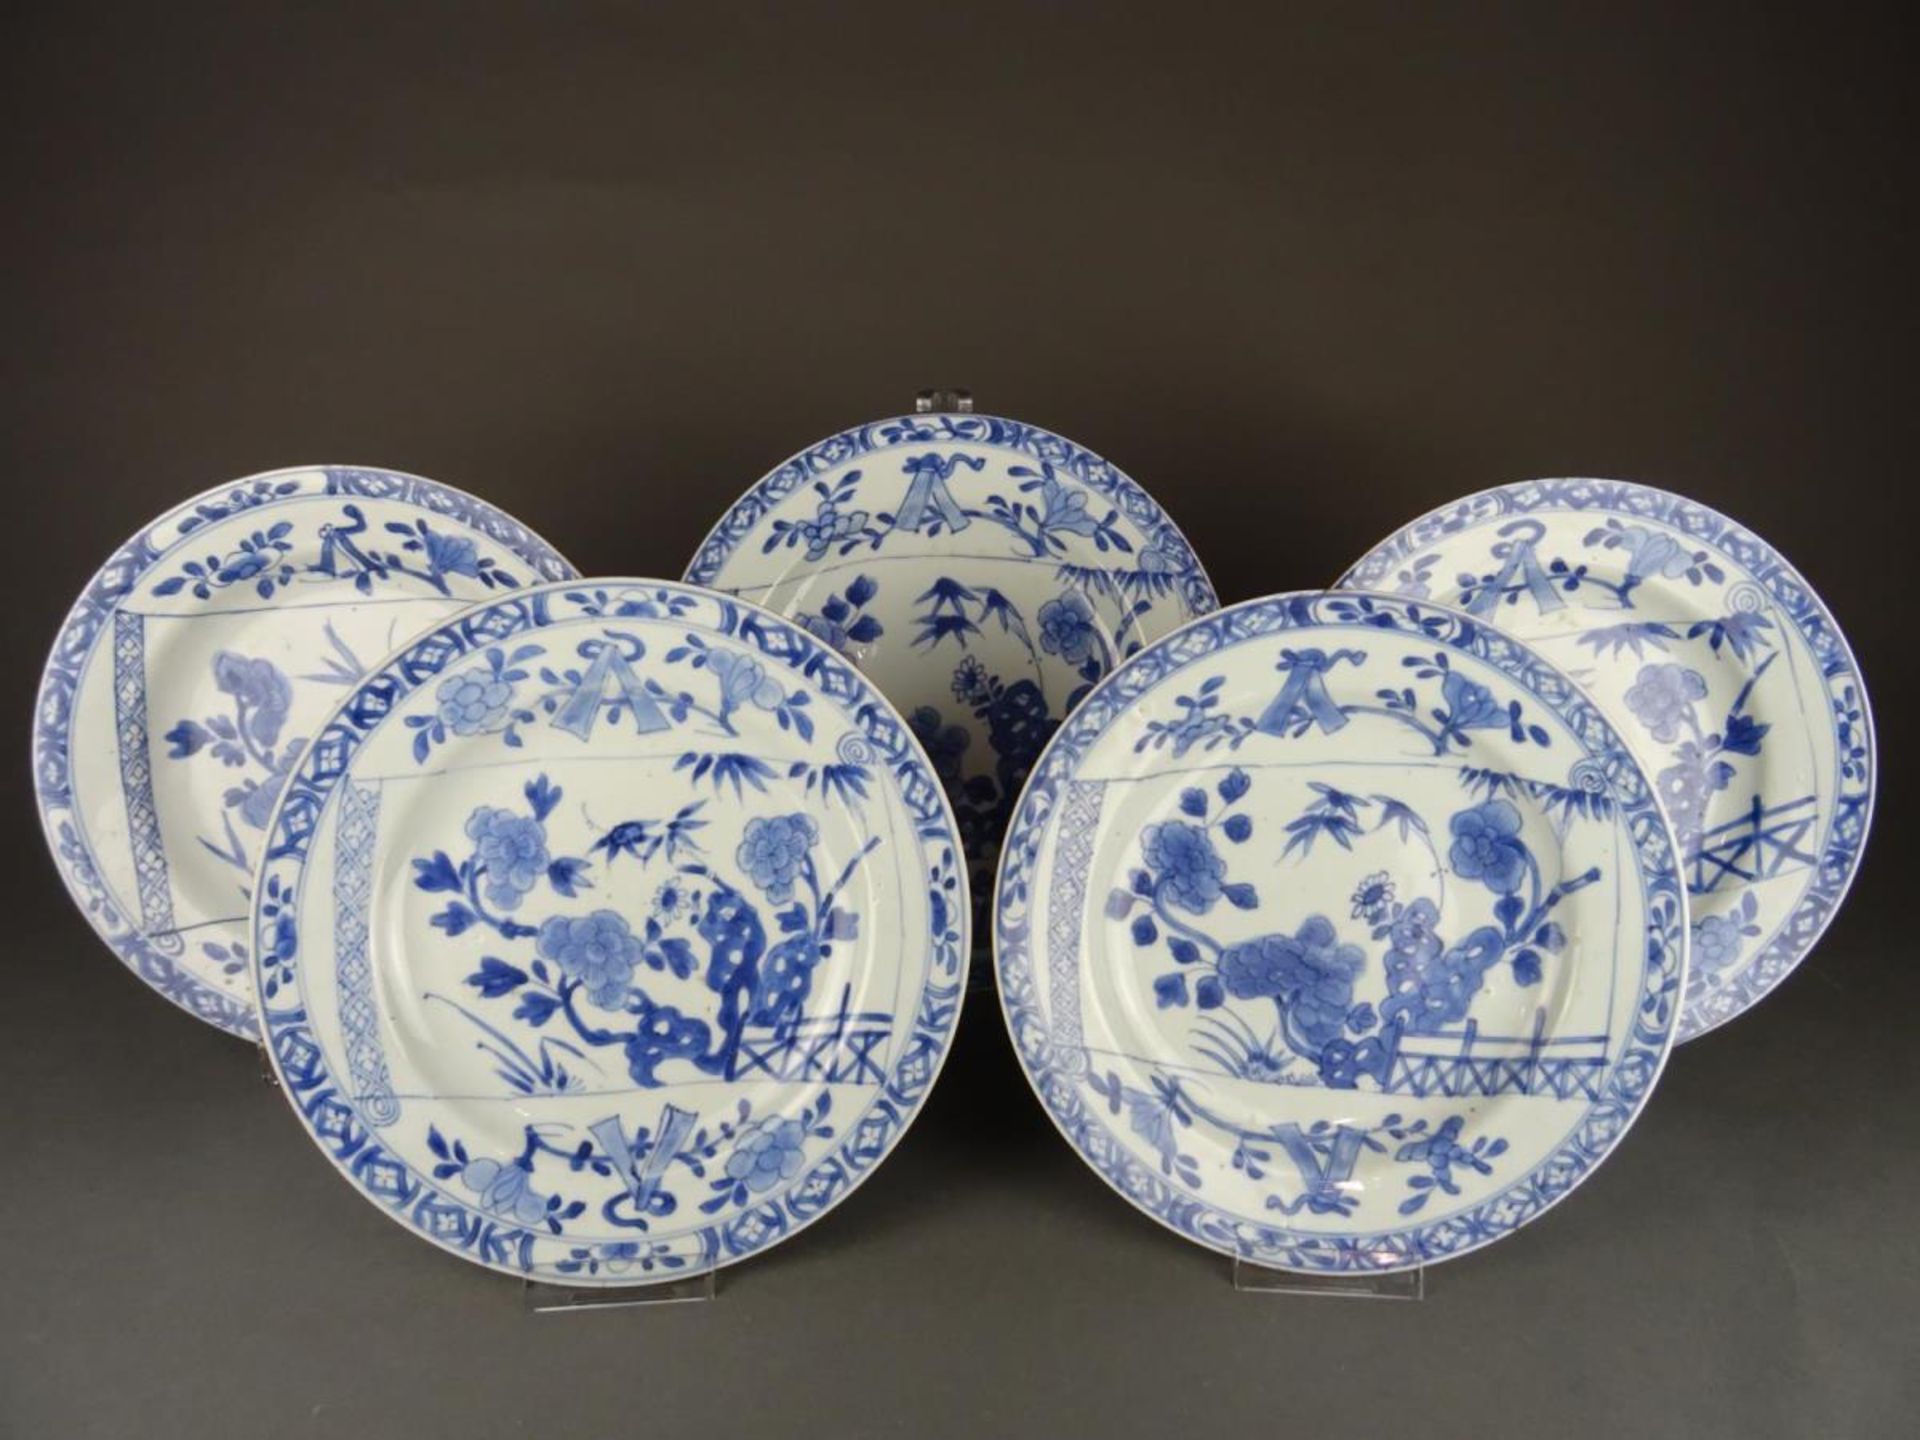 Five porcelain B/W plates